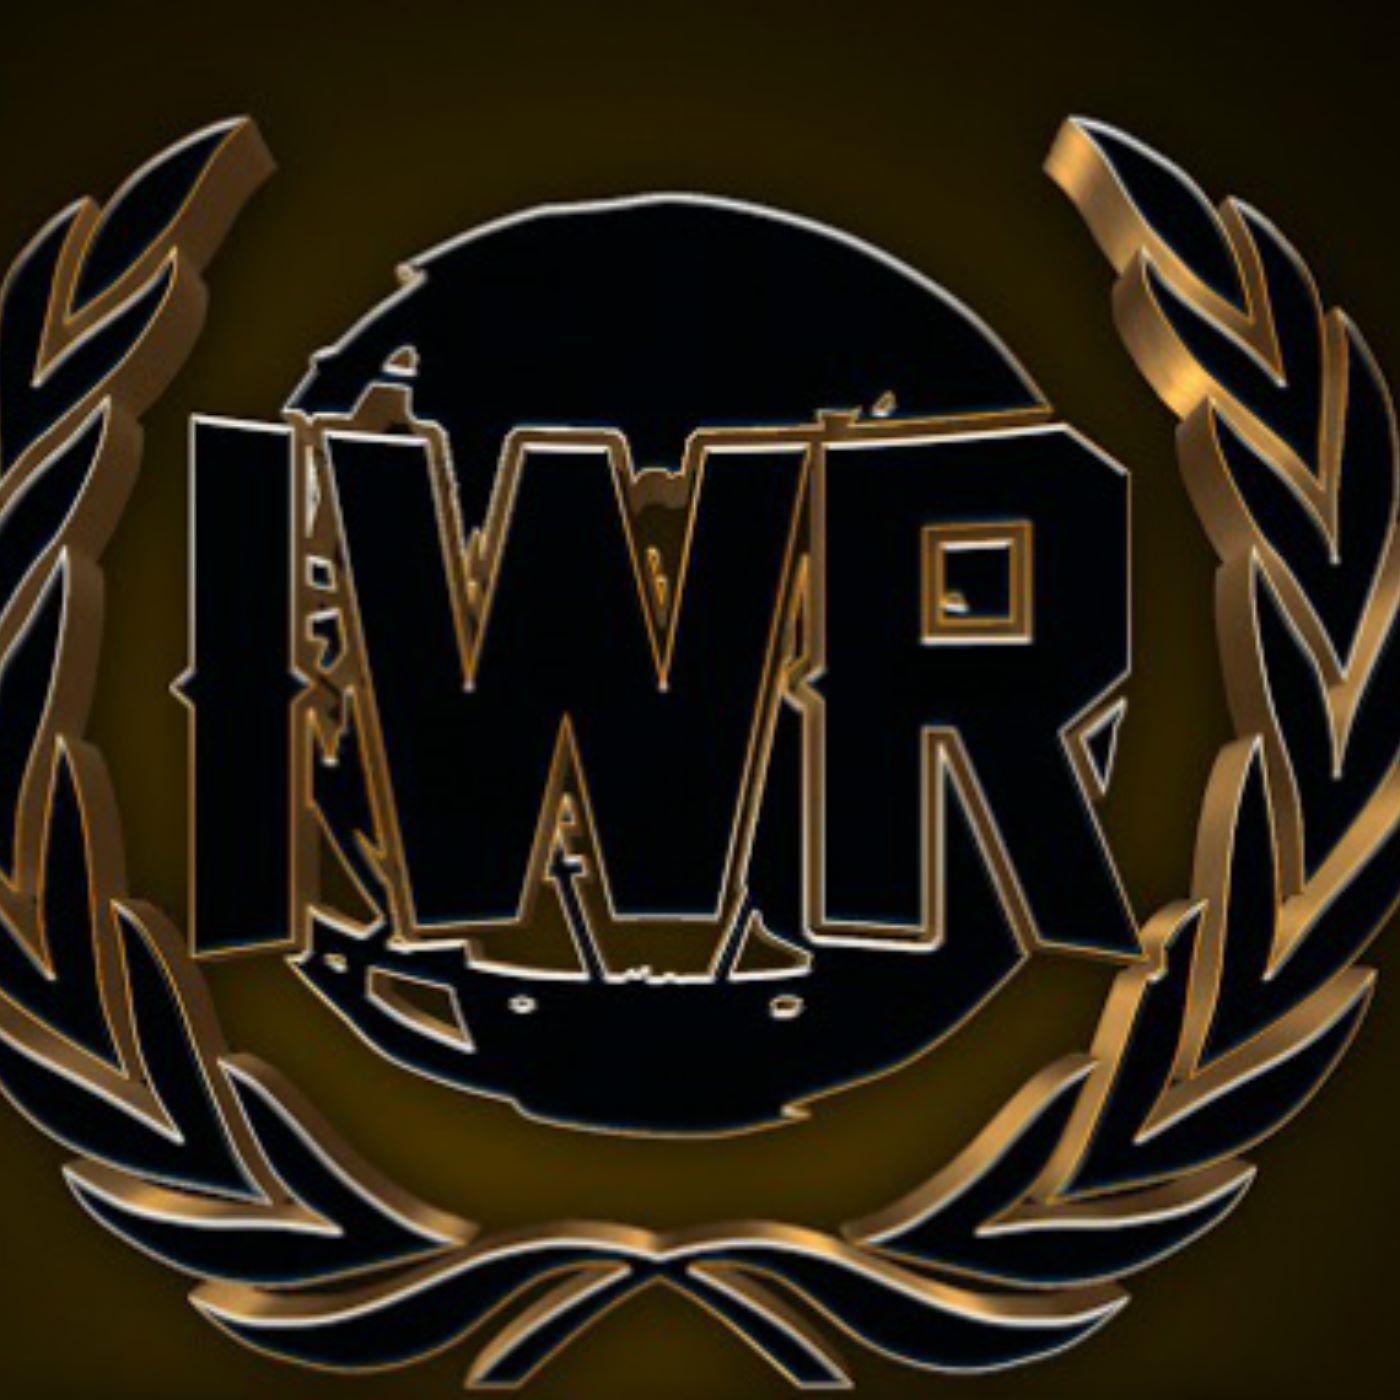 IWR Logo - Episode 2 - IWR Weekly - w/ Bry Willingham - The Lady of IWR